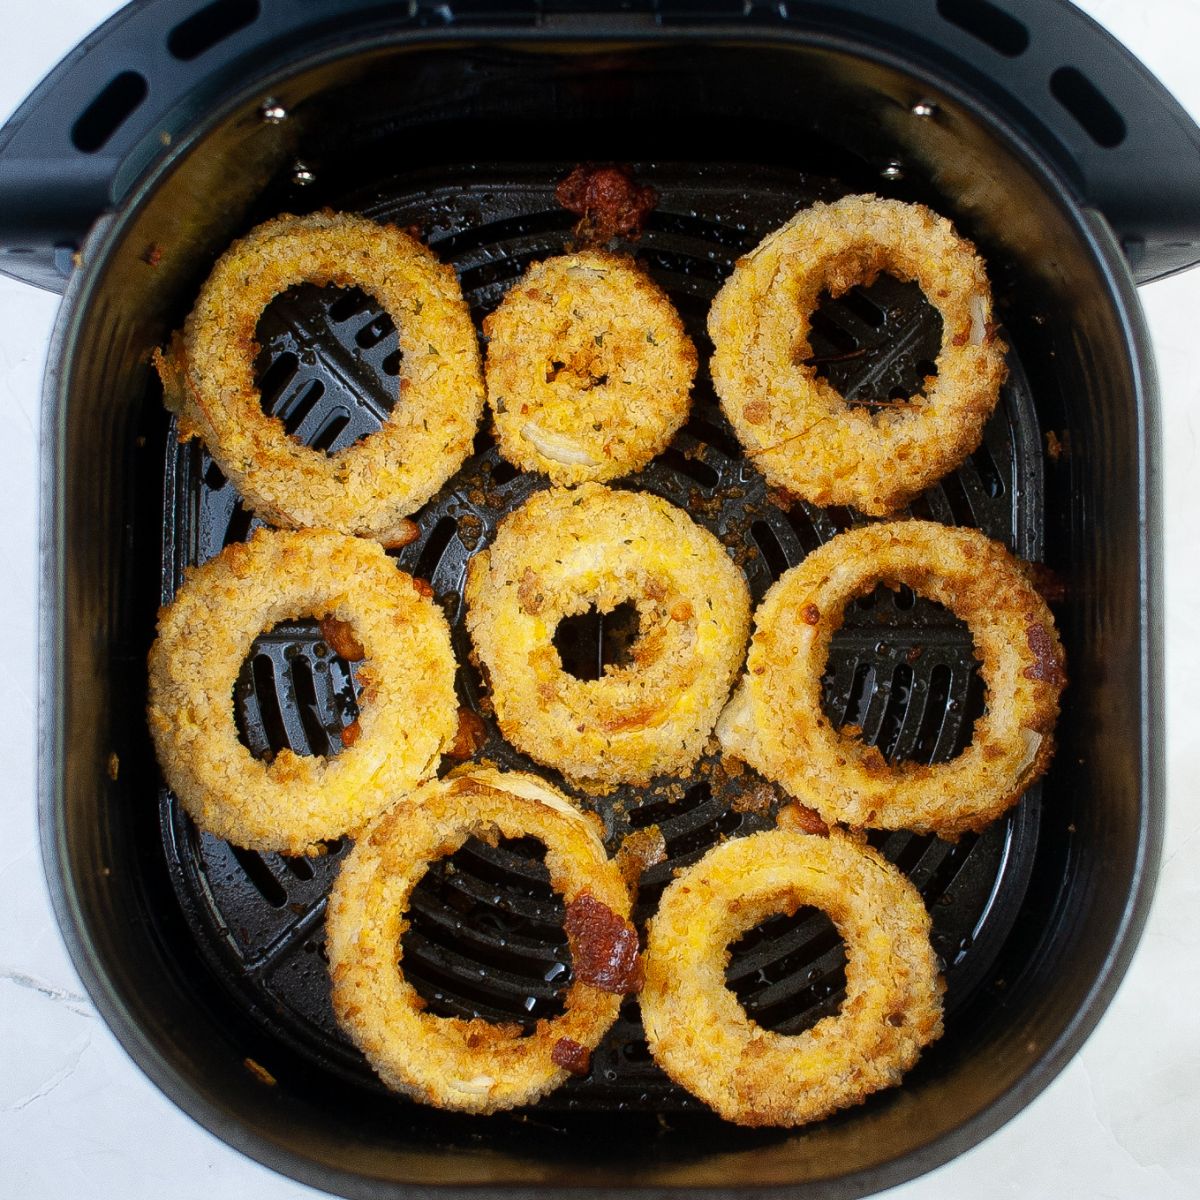 Fried onion rings in an air fryer.